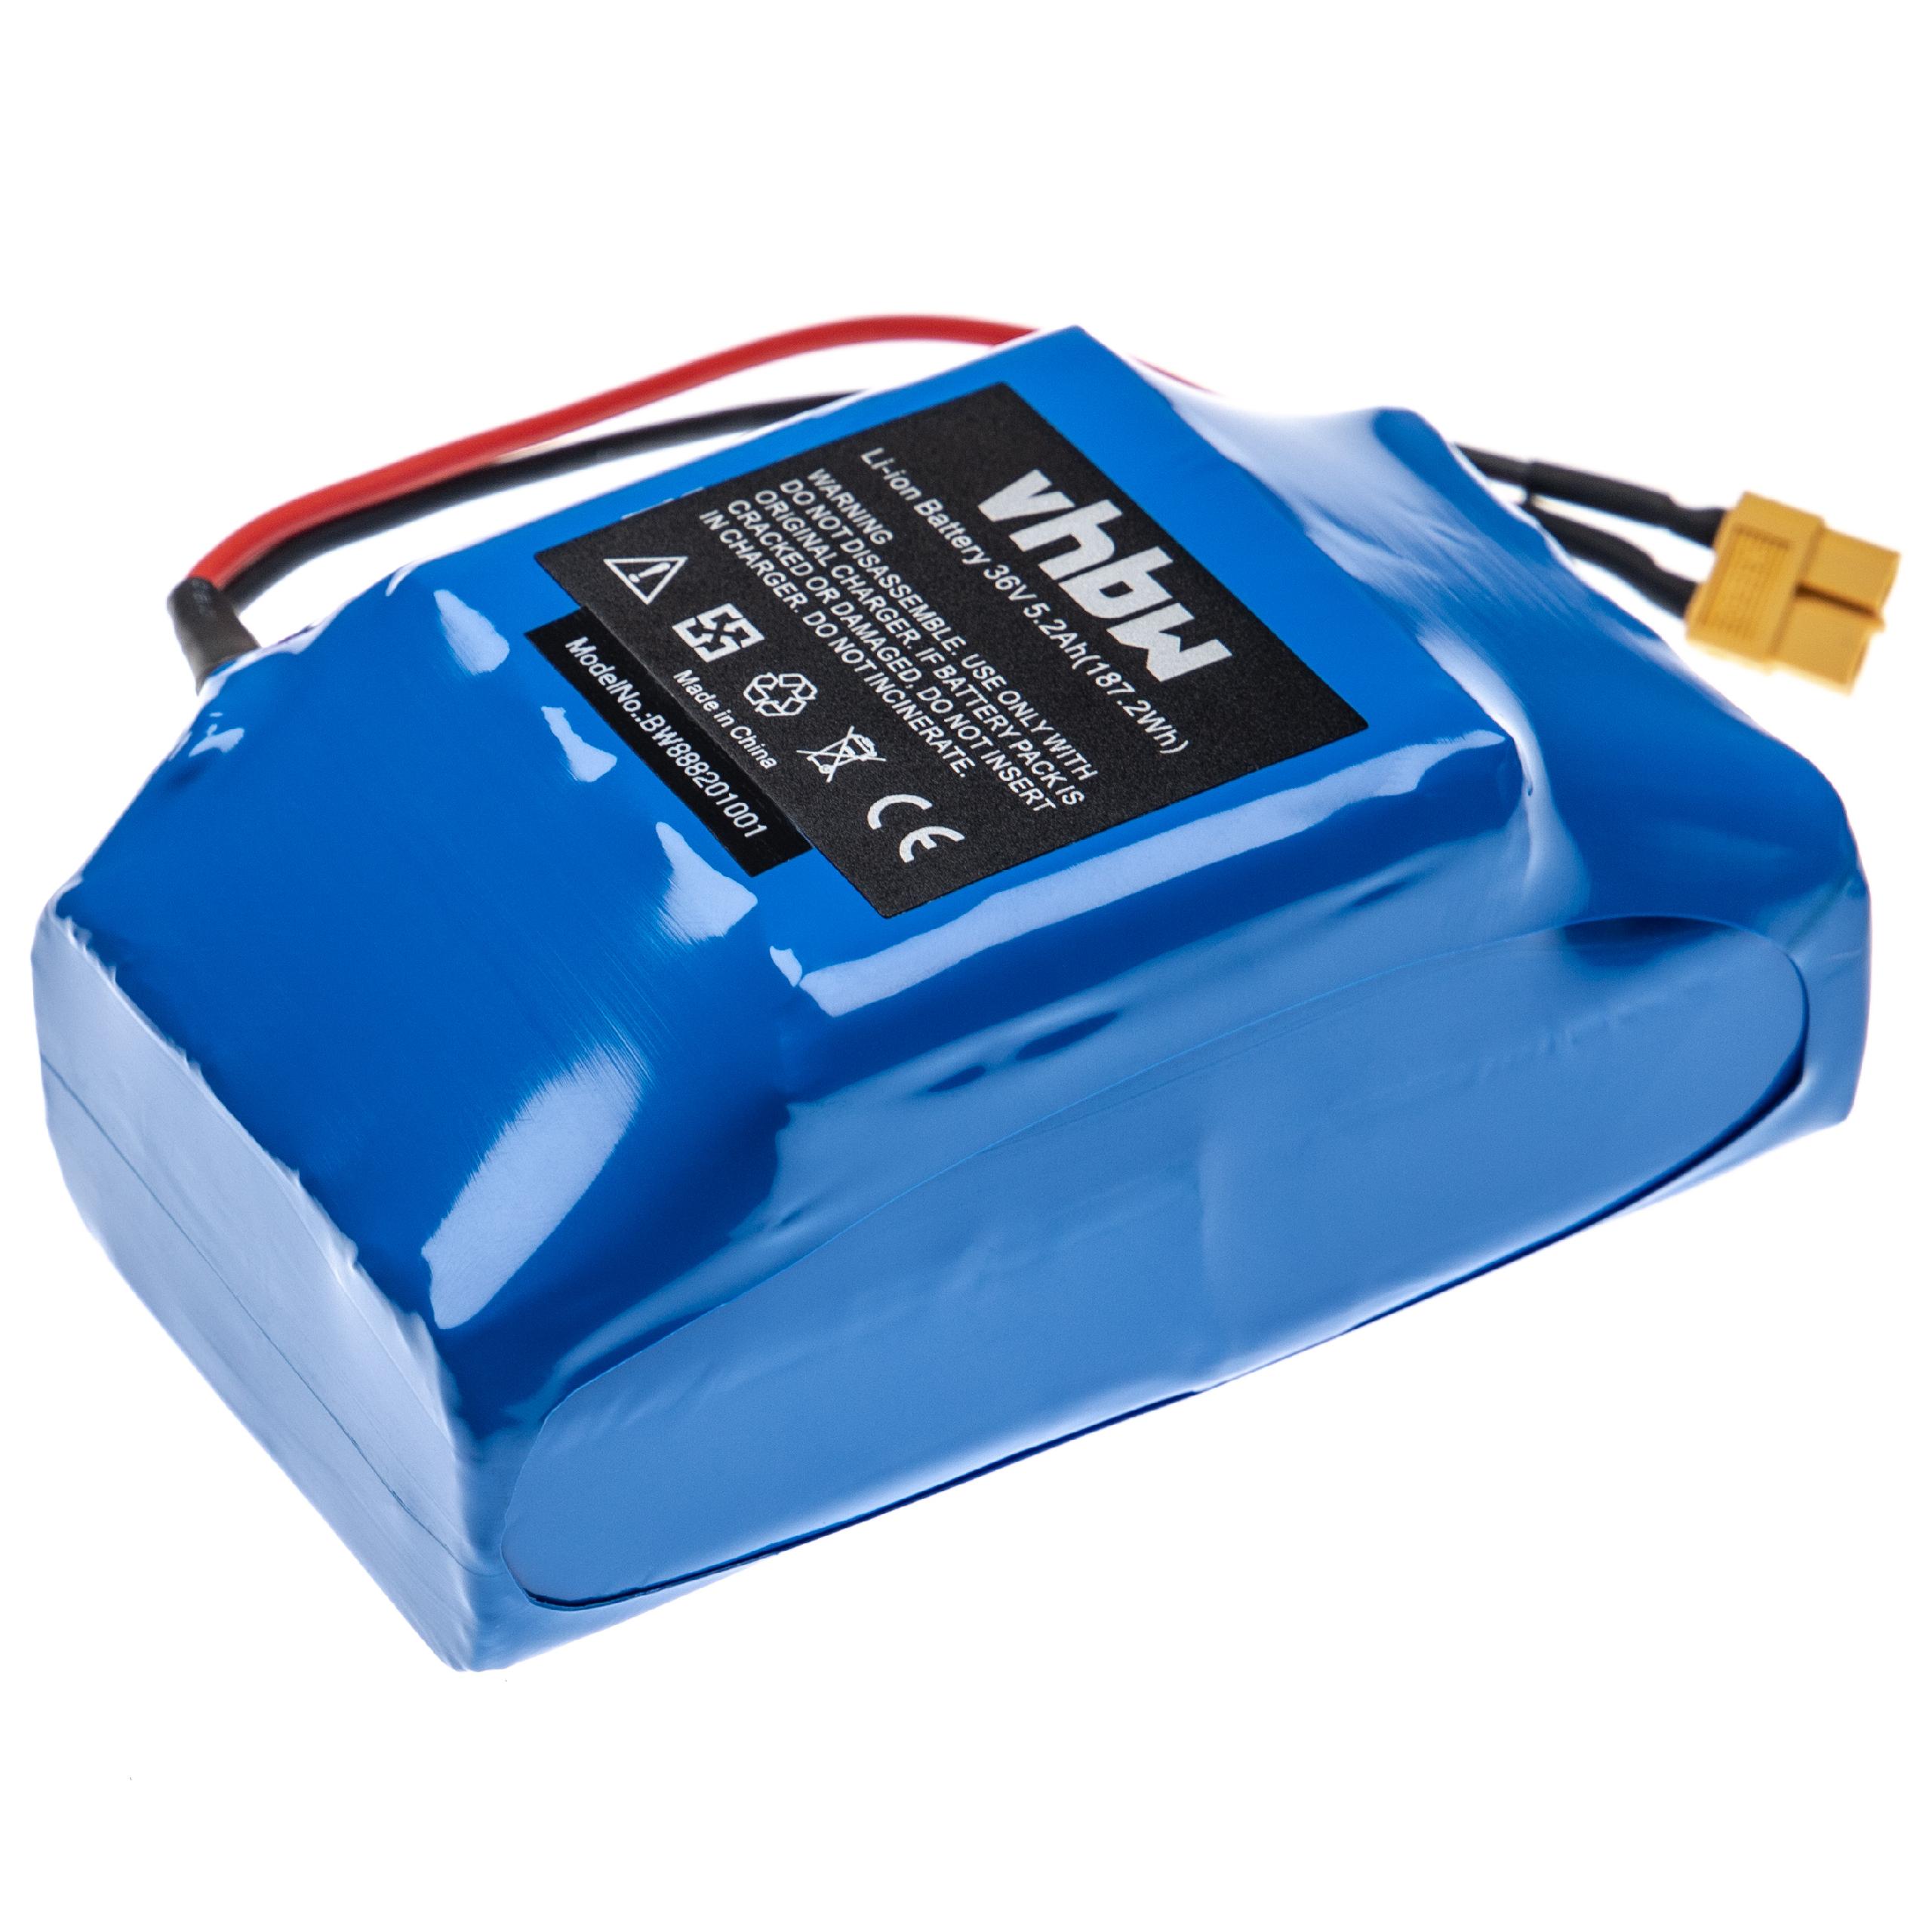 Batterie remplace Bluewheel 10IXR19/65-2, HPK-11 pour gyropode - 5200mAh 36V Li-ion